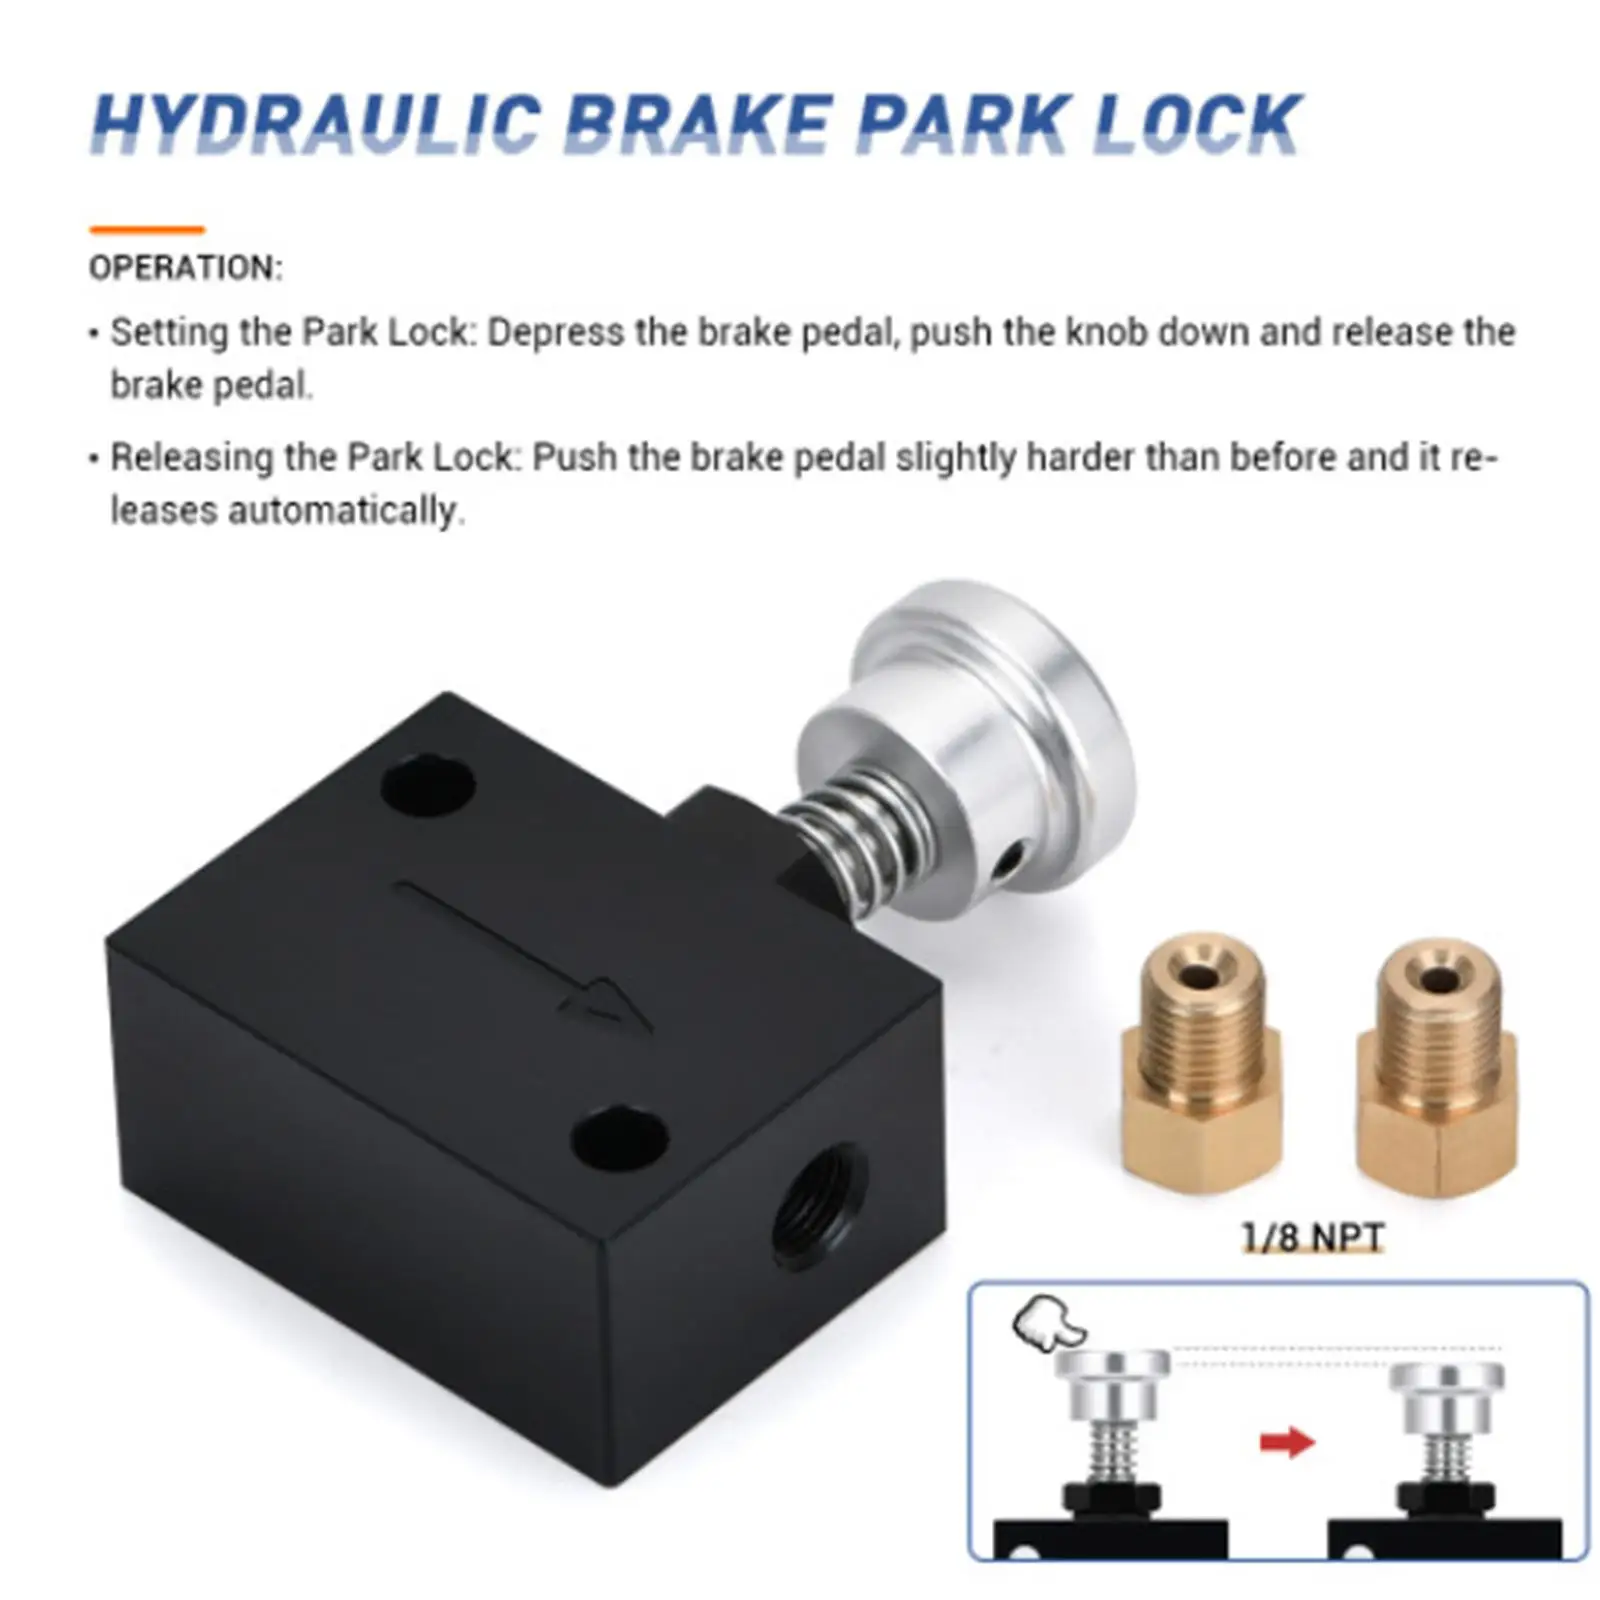 Brake Lock Hydraulic Brake Park Lock Alumunum for Disc or Drums Cars